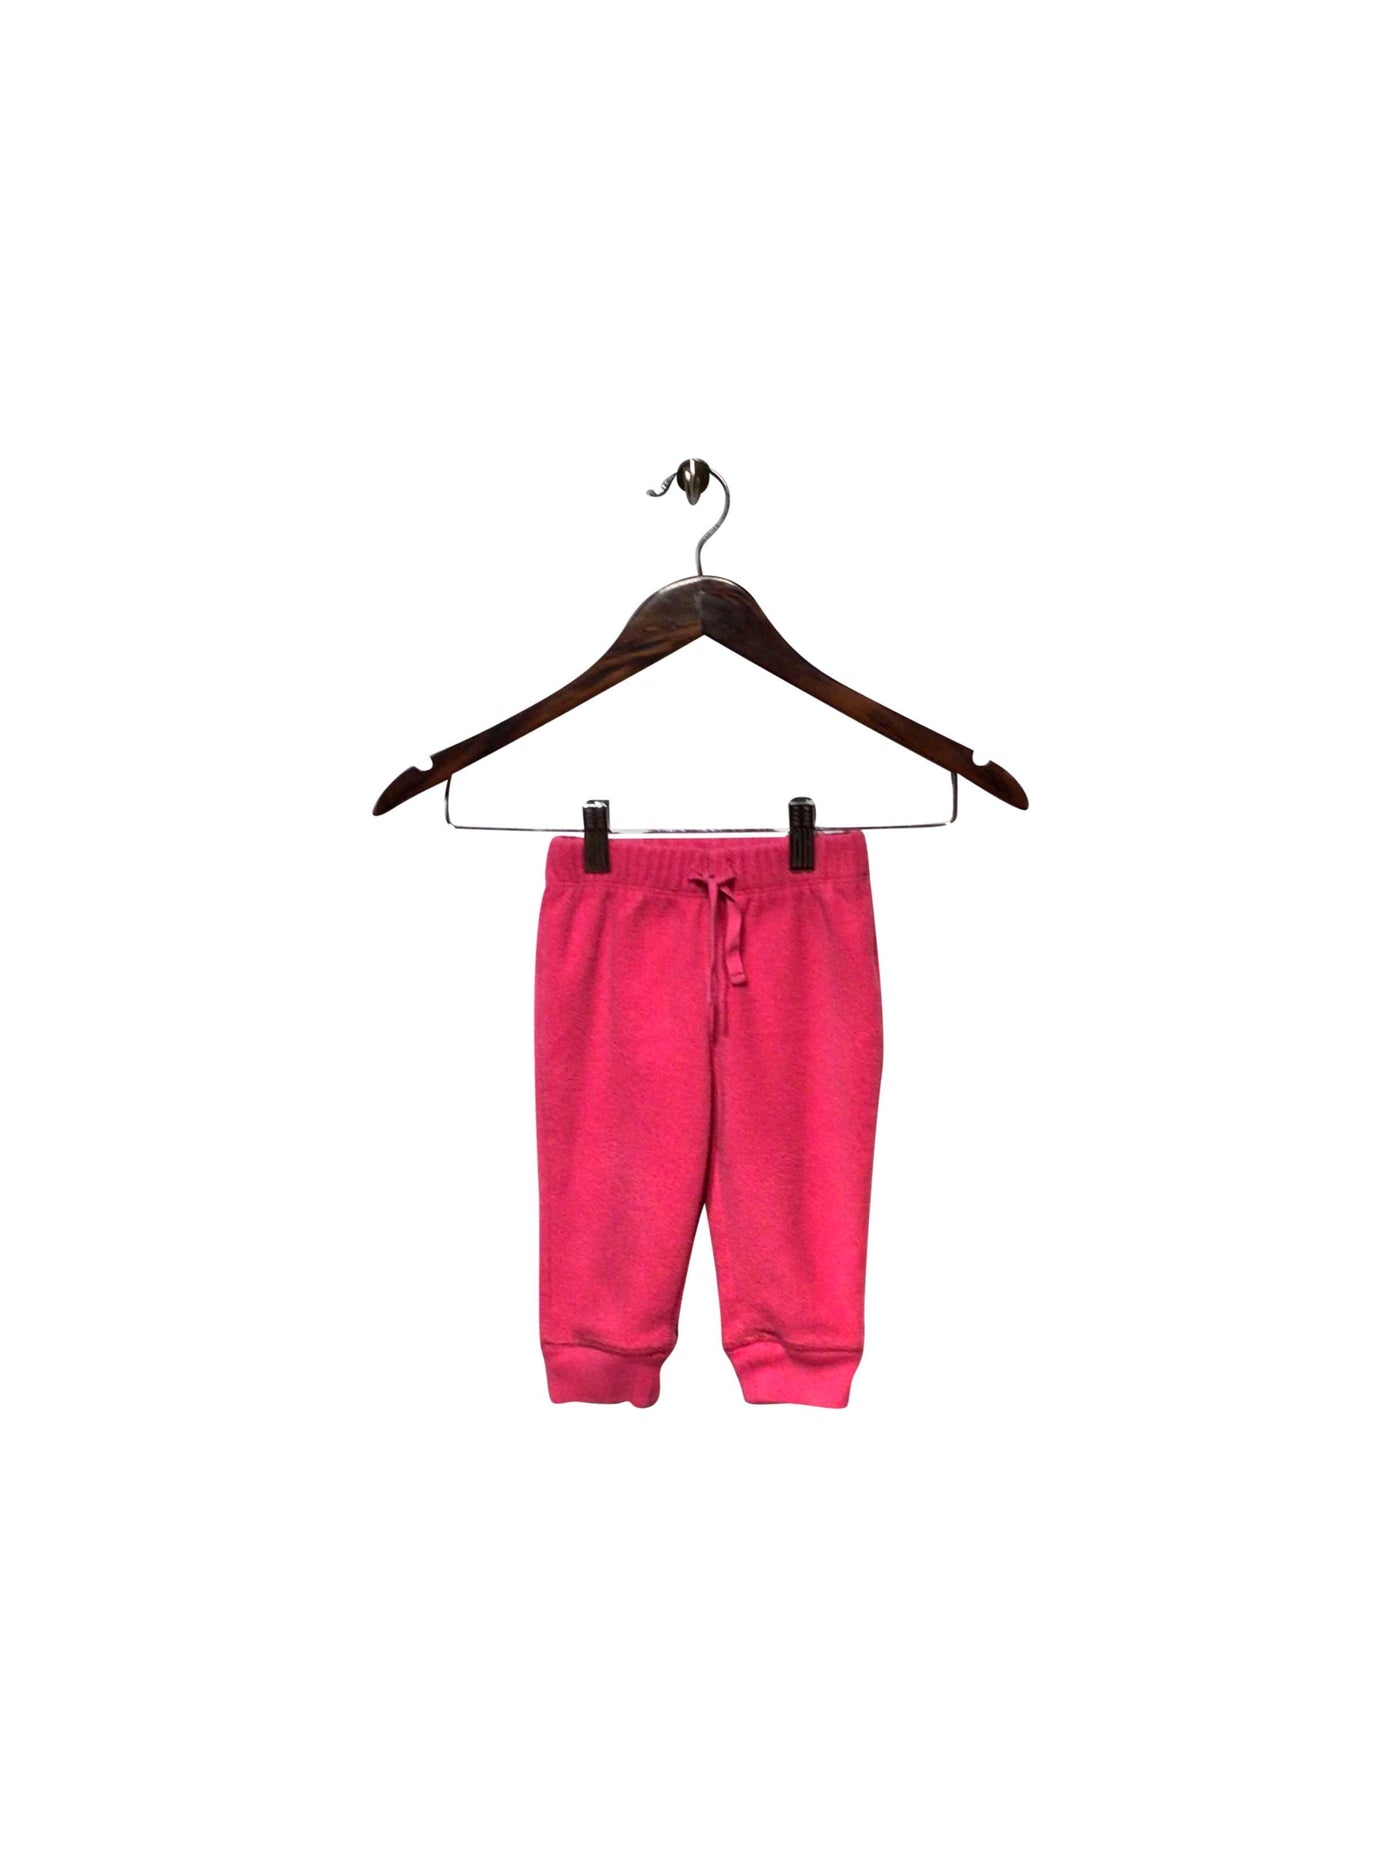 GAP Regular fit Pant in Pink  -  12-16M  6.95 Koop